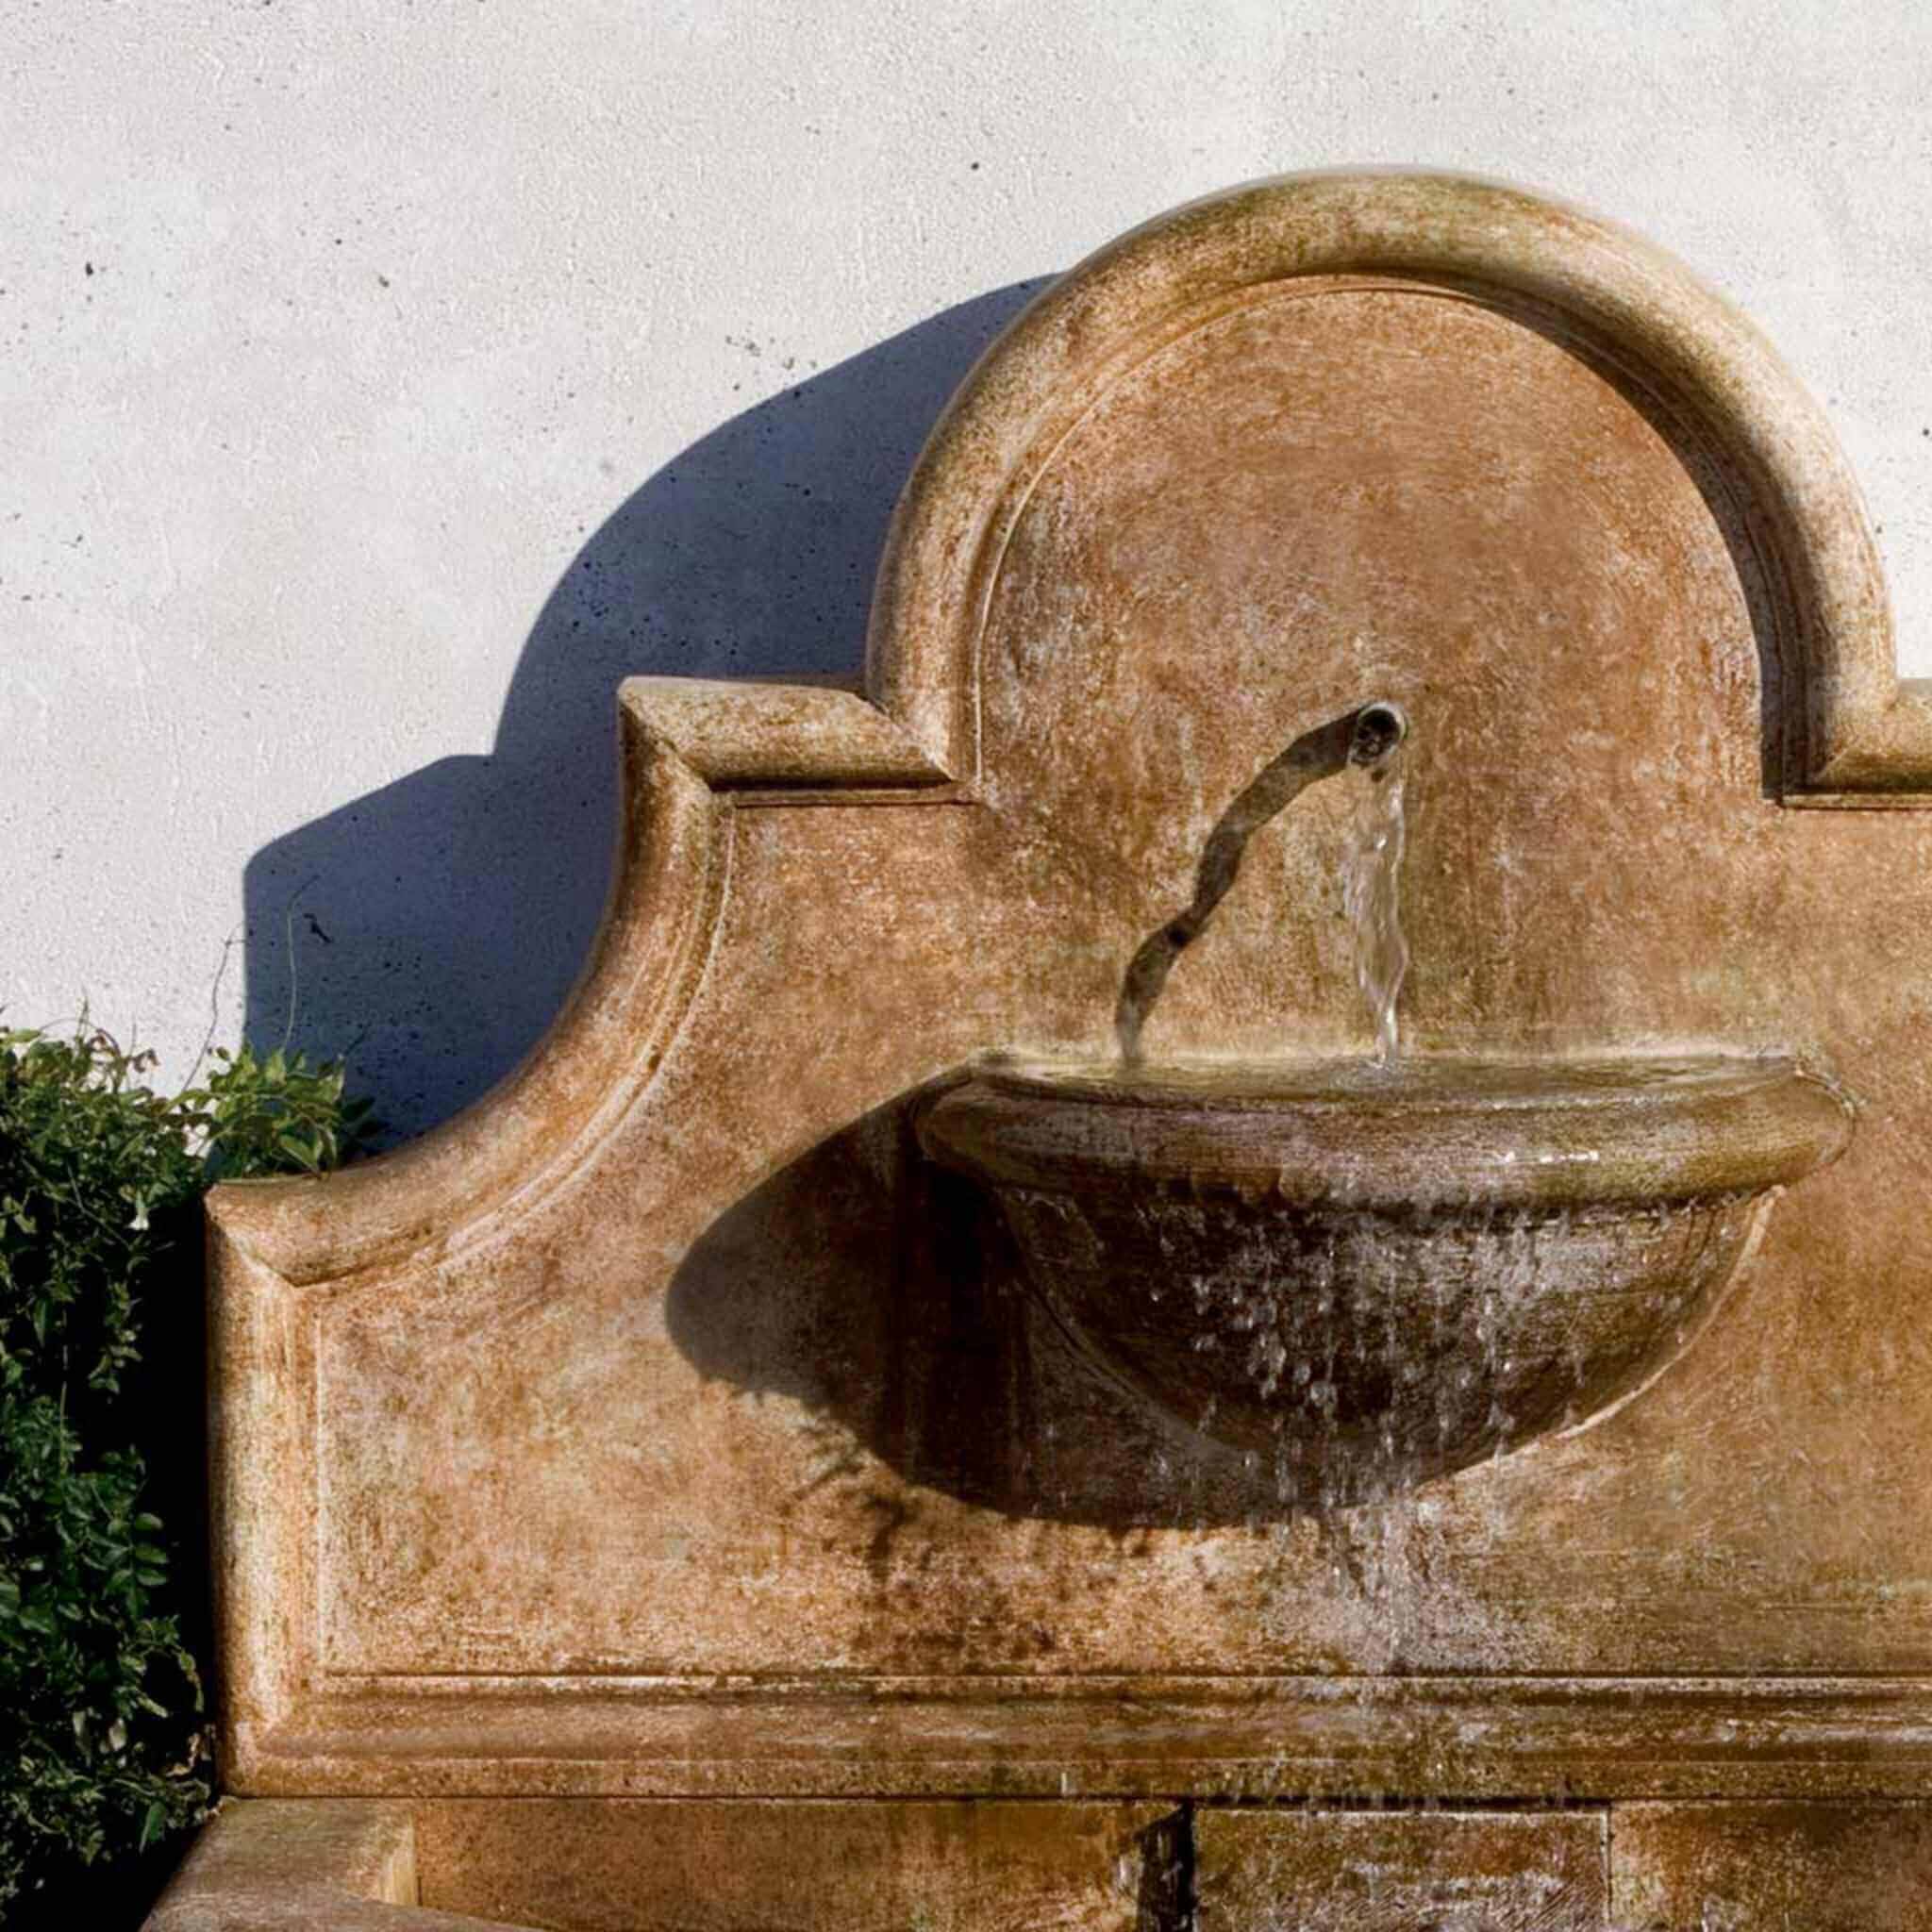 Andalusia Concrete Wall Fountain - Campania #FT120